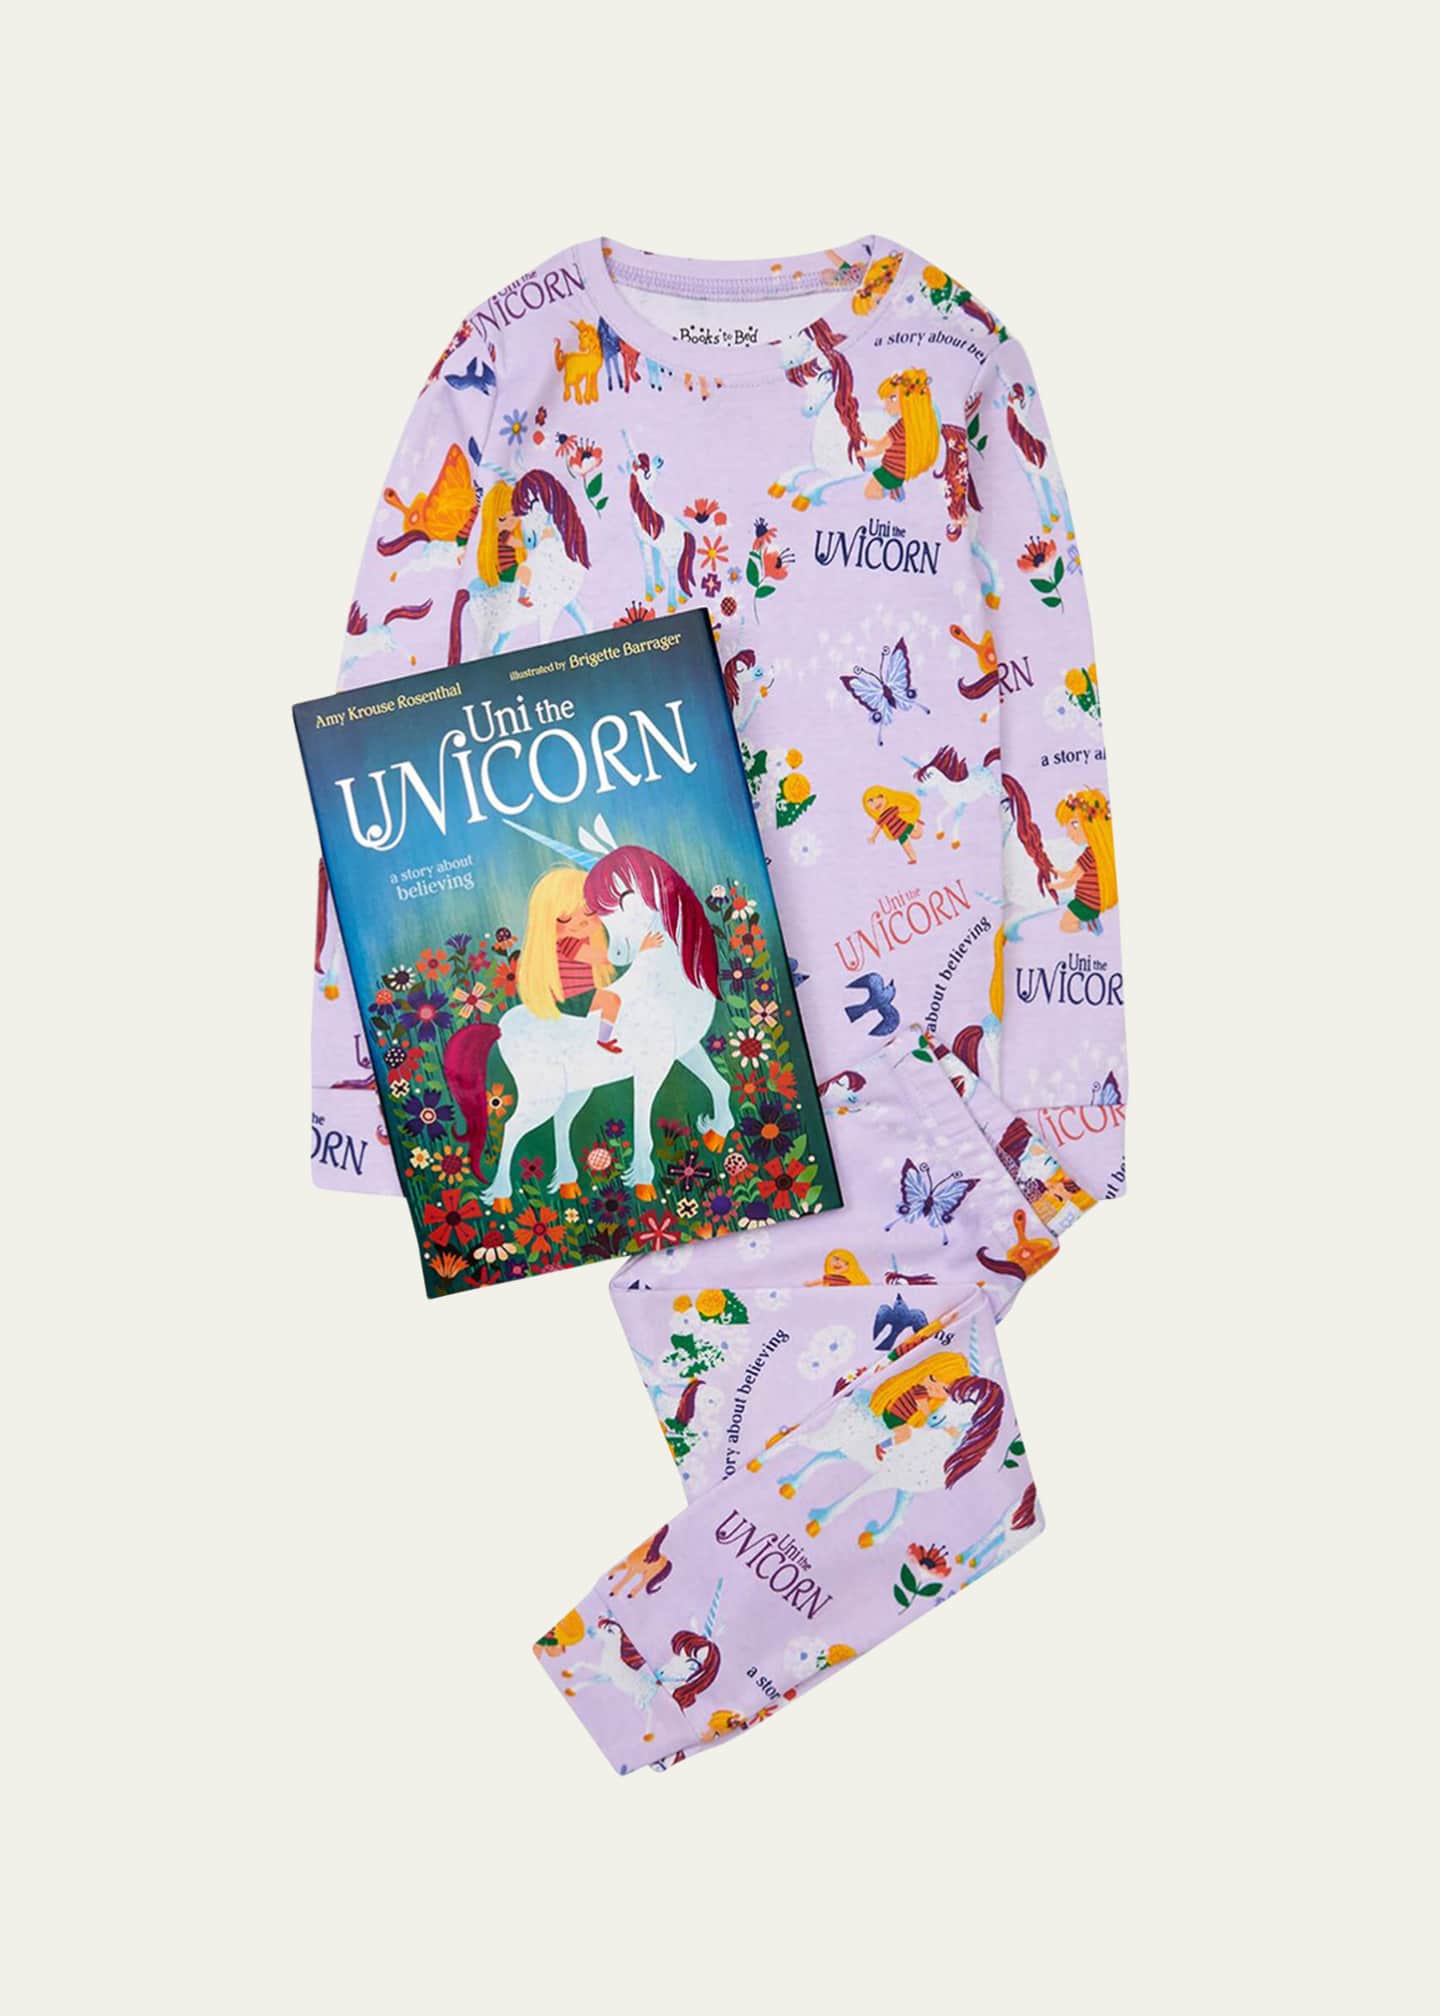 Books To Bed Kid's Uni the Unicorn Pajama & Book Gift Set, Size 2-6 Image 1 of 3